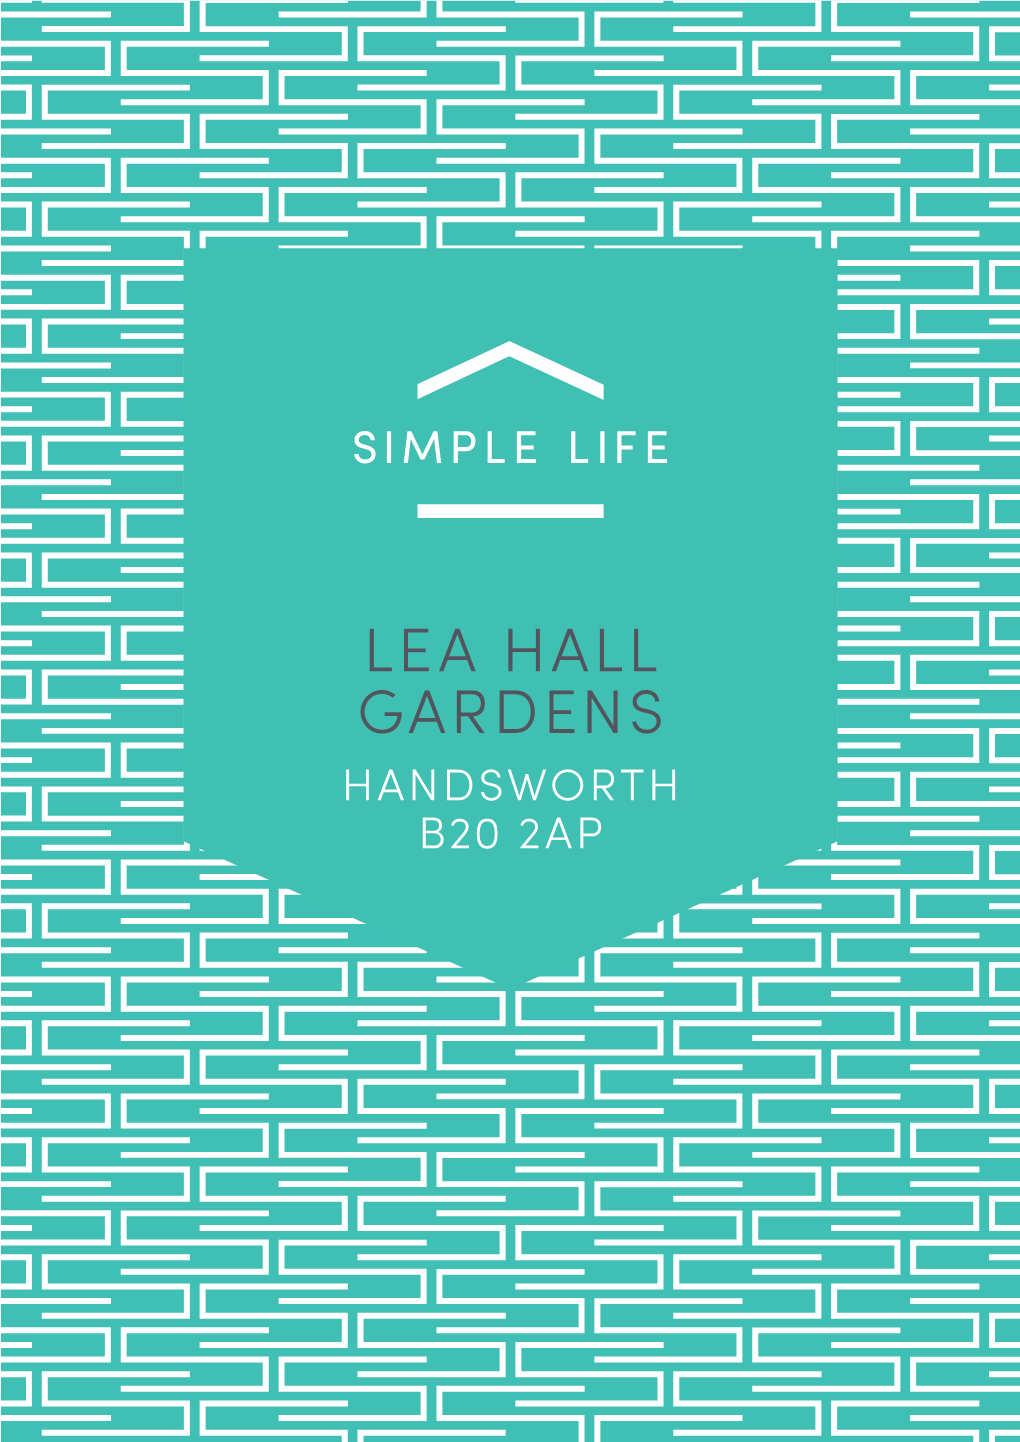 Lea Hall Gardens Handsworth B20 2Ap